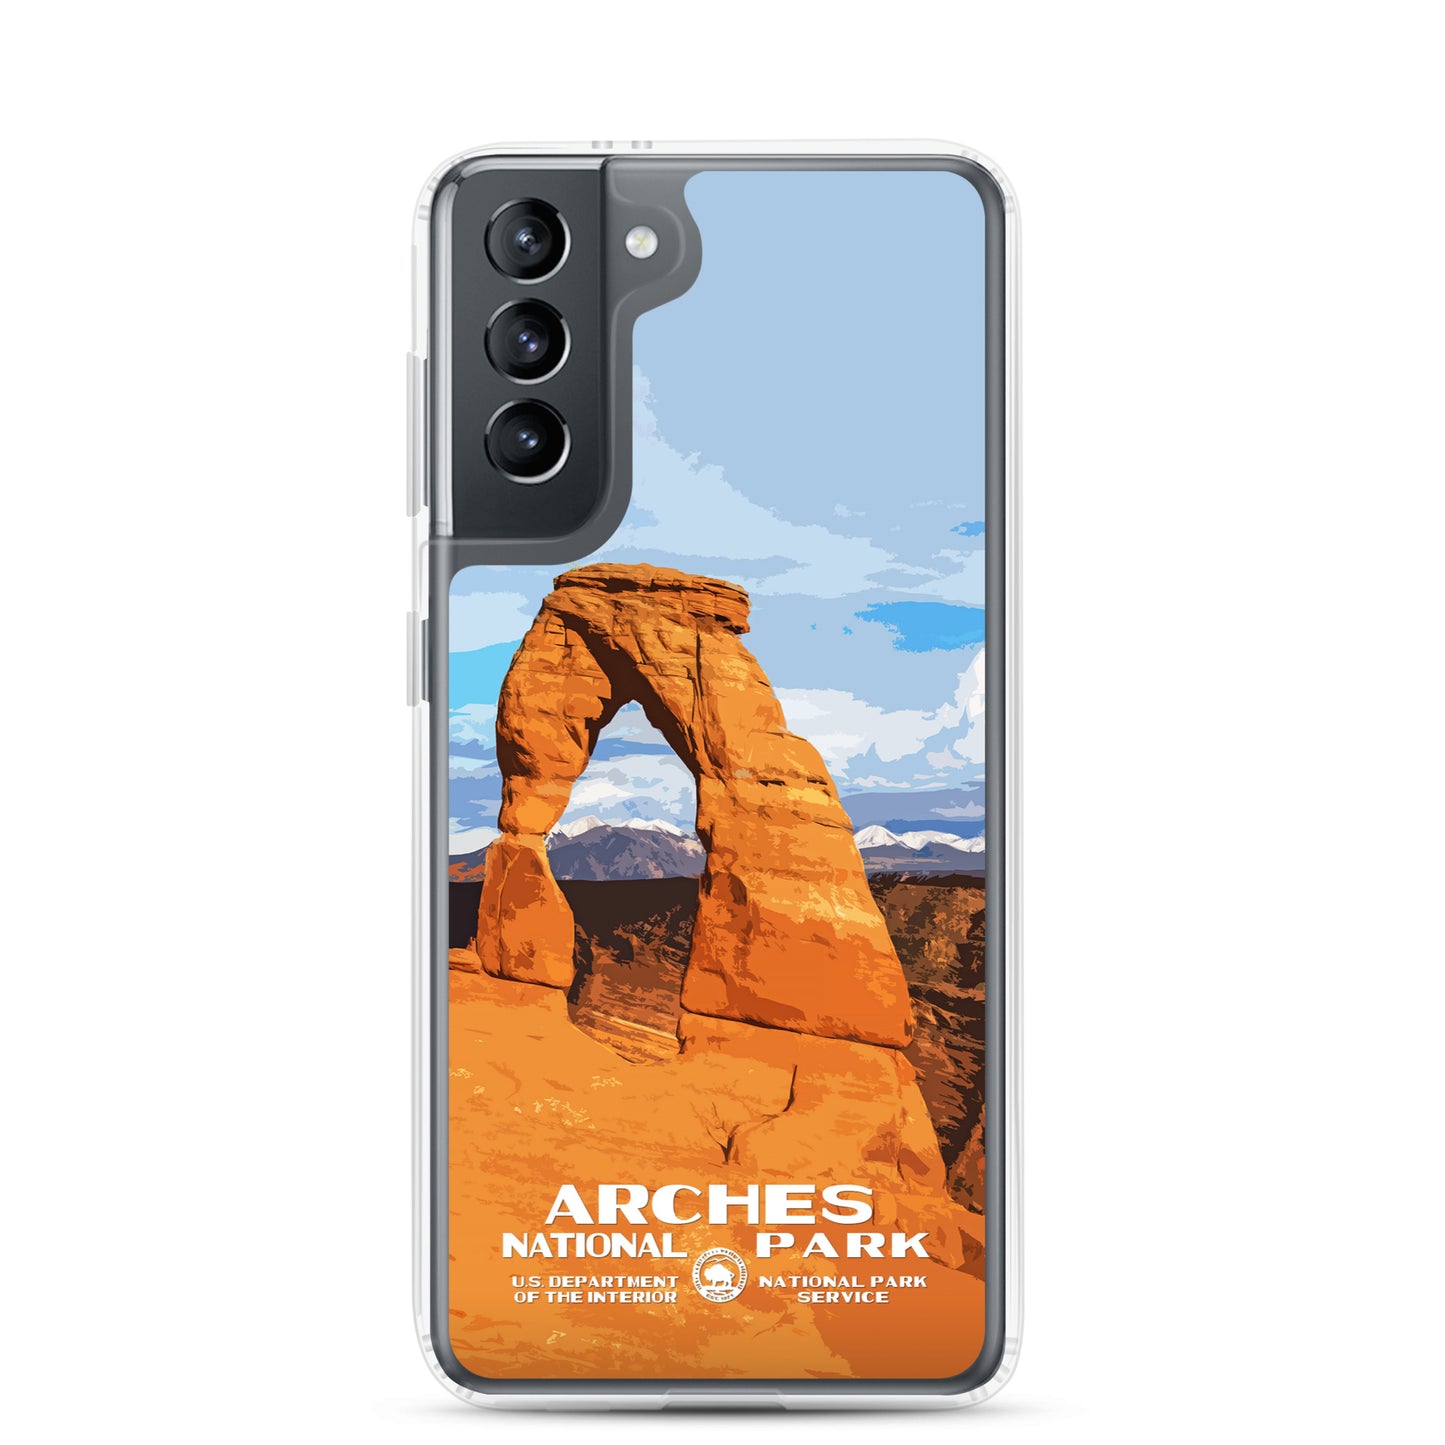 Arches National Park Samsung® Phone Case